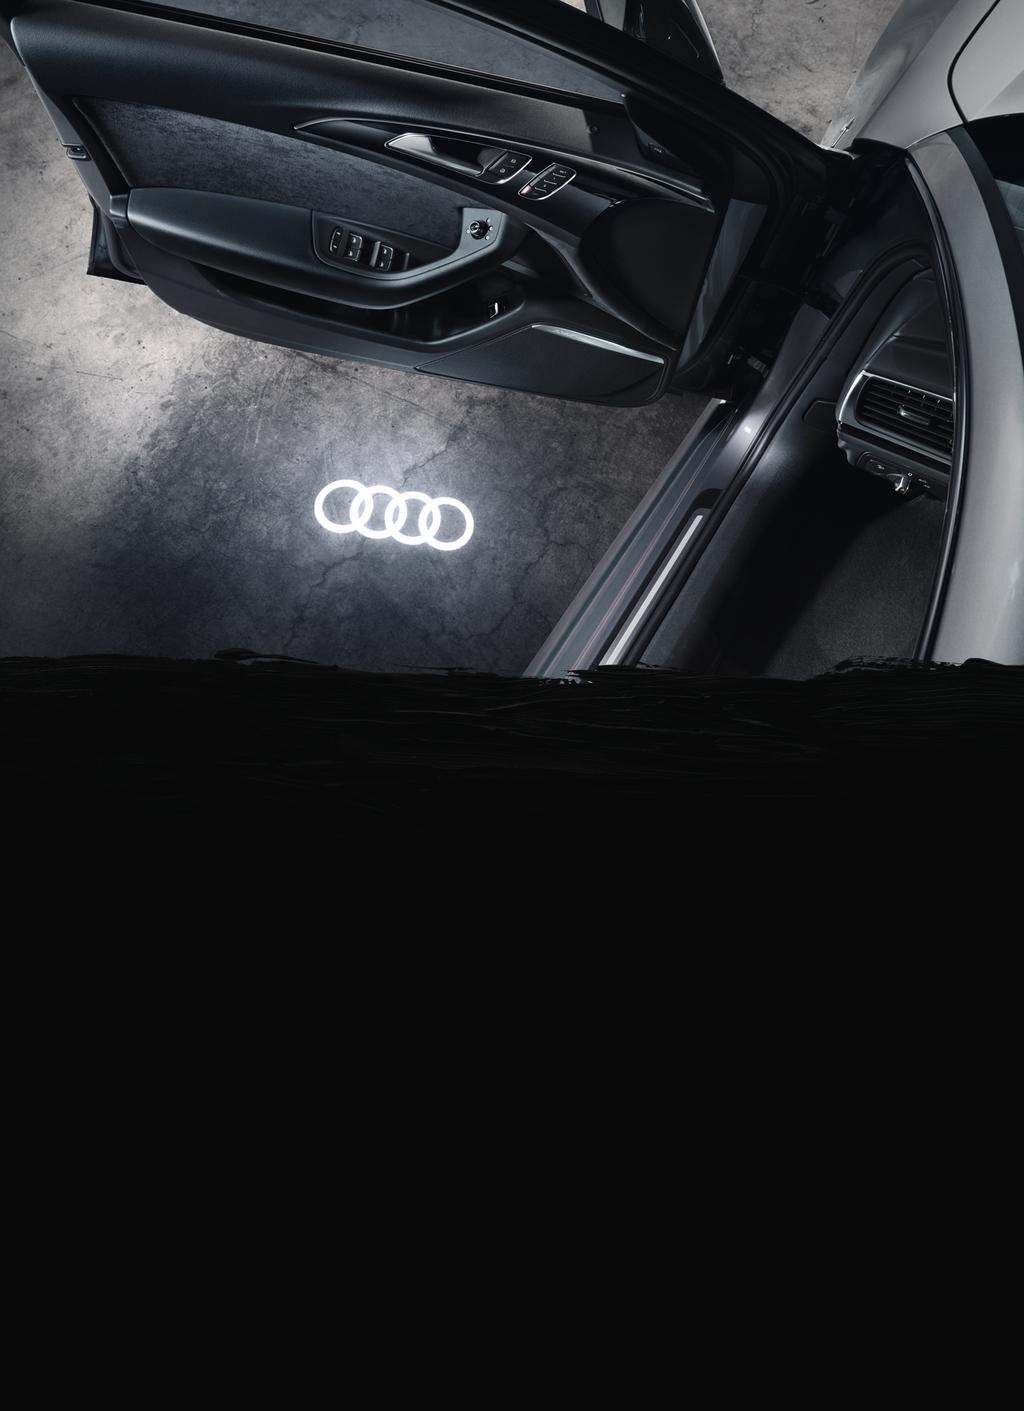 2-Monats-Vorteilsleasing-Angebot1 z. B. Audi A6 Avant Black Edition 2.0 TDI ultra, S tronic, 7-stufig* 10 kw (190 PS), inkl.